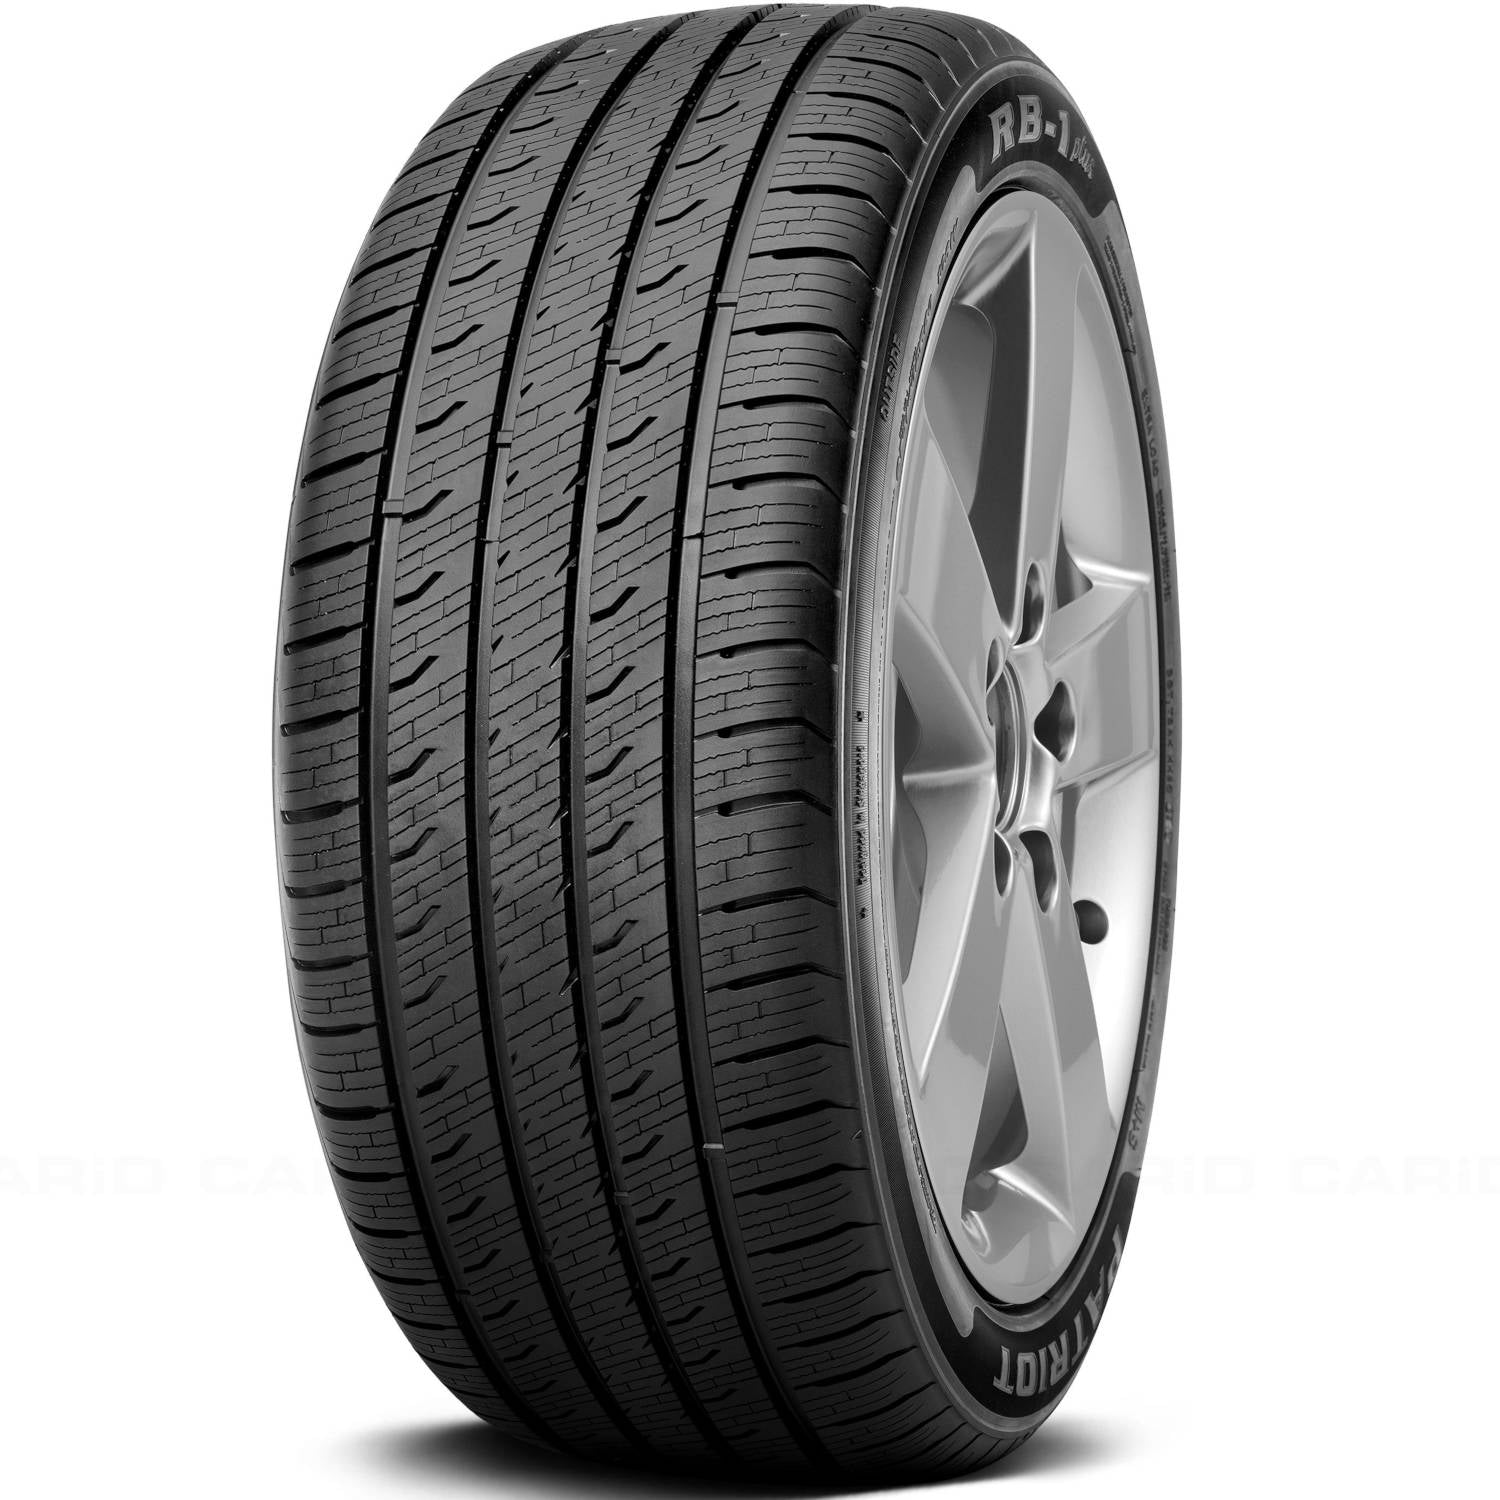 PATRIOT RB-1 PLUS 245/65R17 (29.5X9.7R 17) Tires